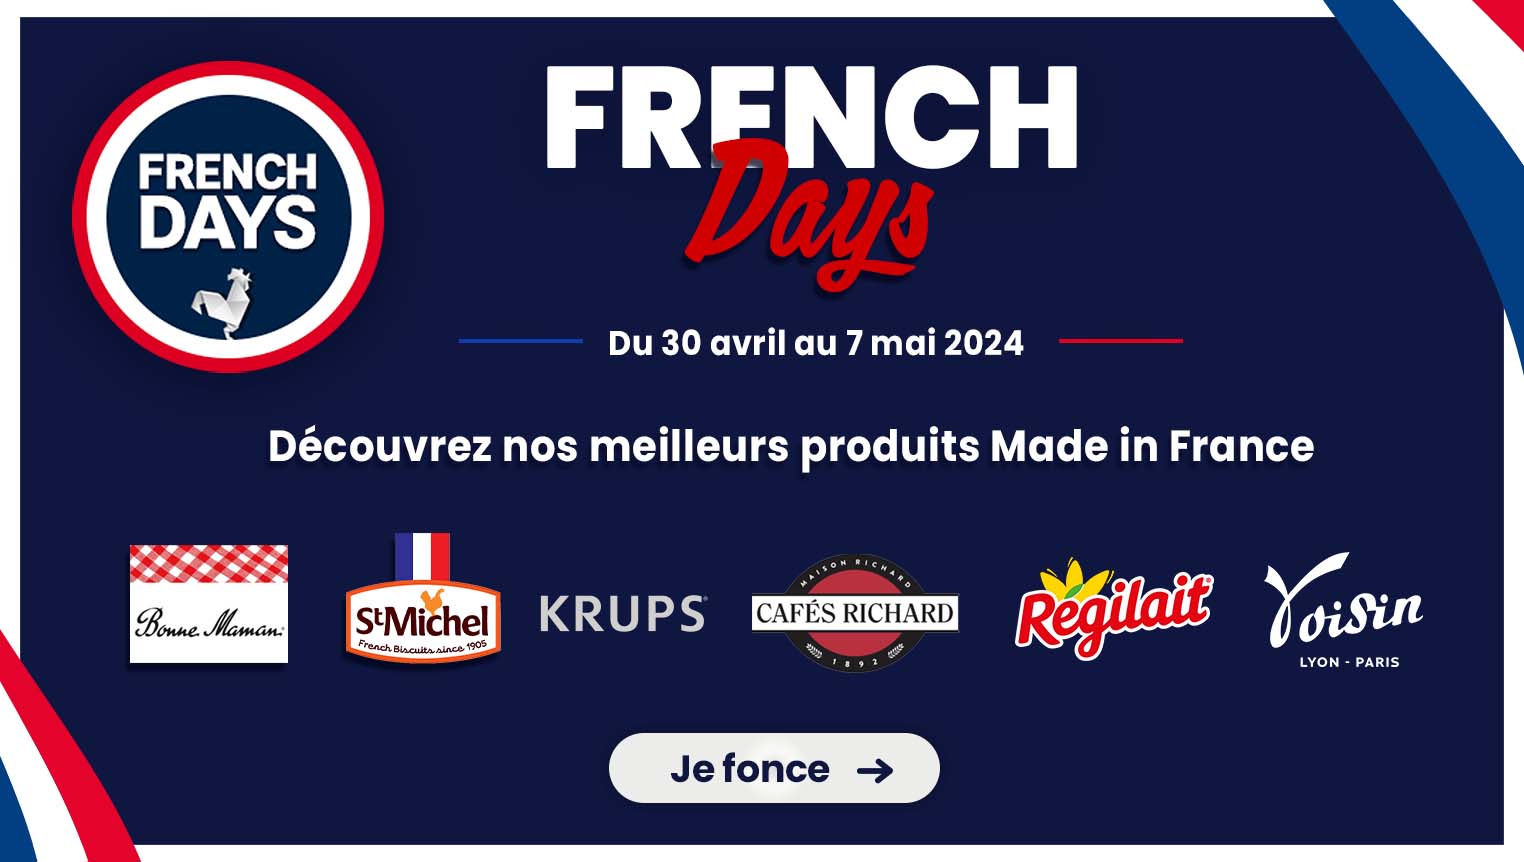 French days 2024